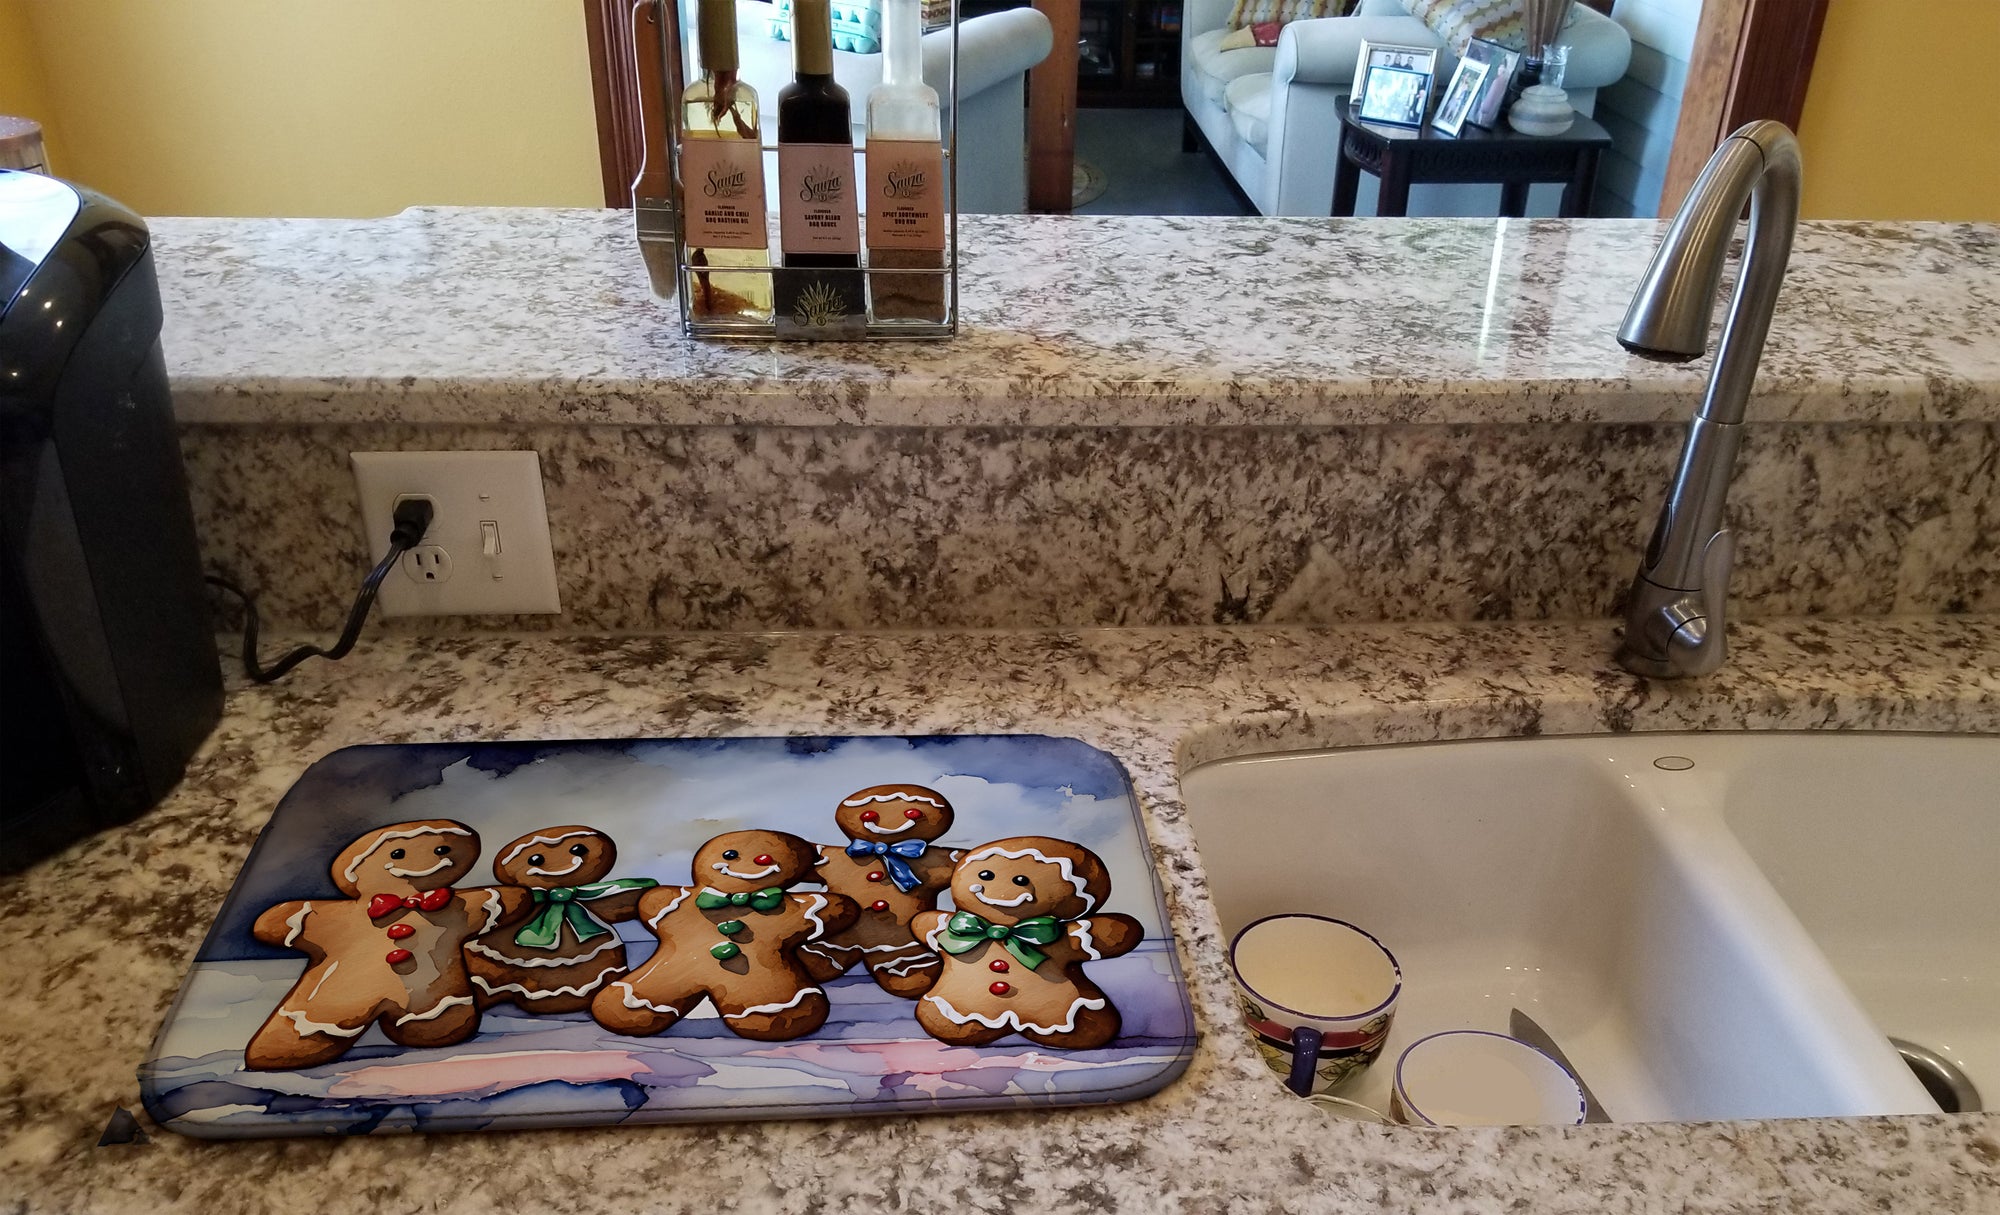 Buy this Christmas Gingerbread Dish Drying Mat